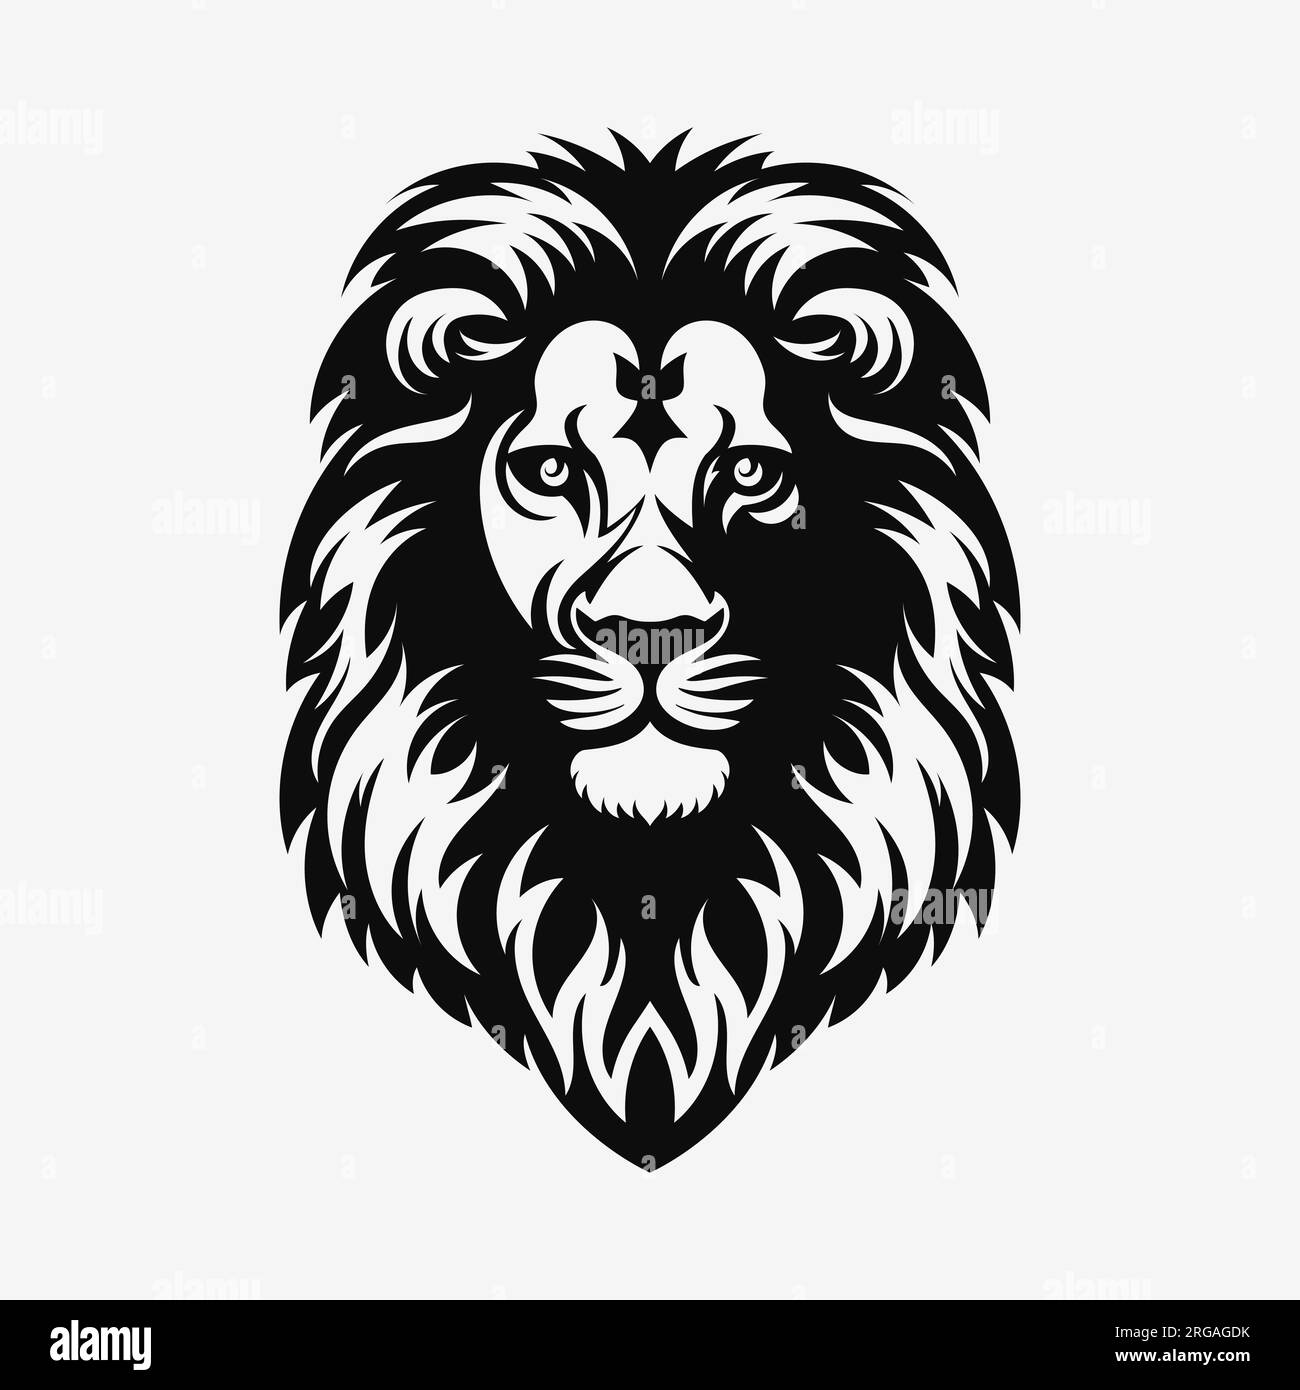 Lion head logo. Black and white icon. Vector illustration EPS10 Stock Vector